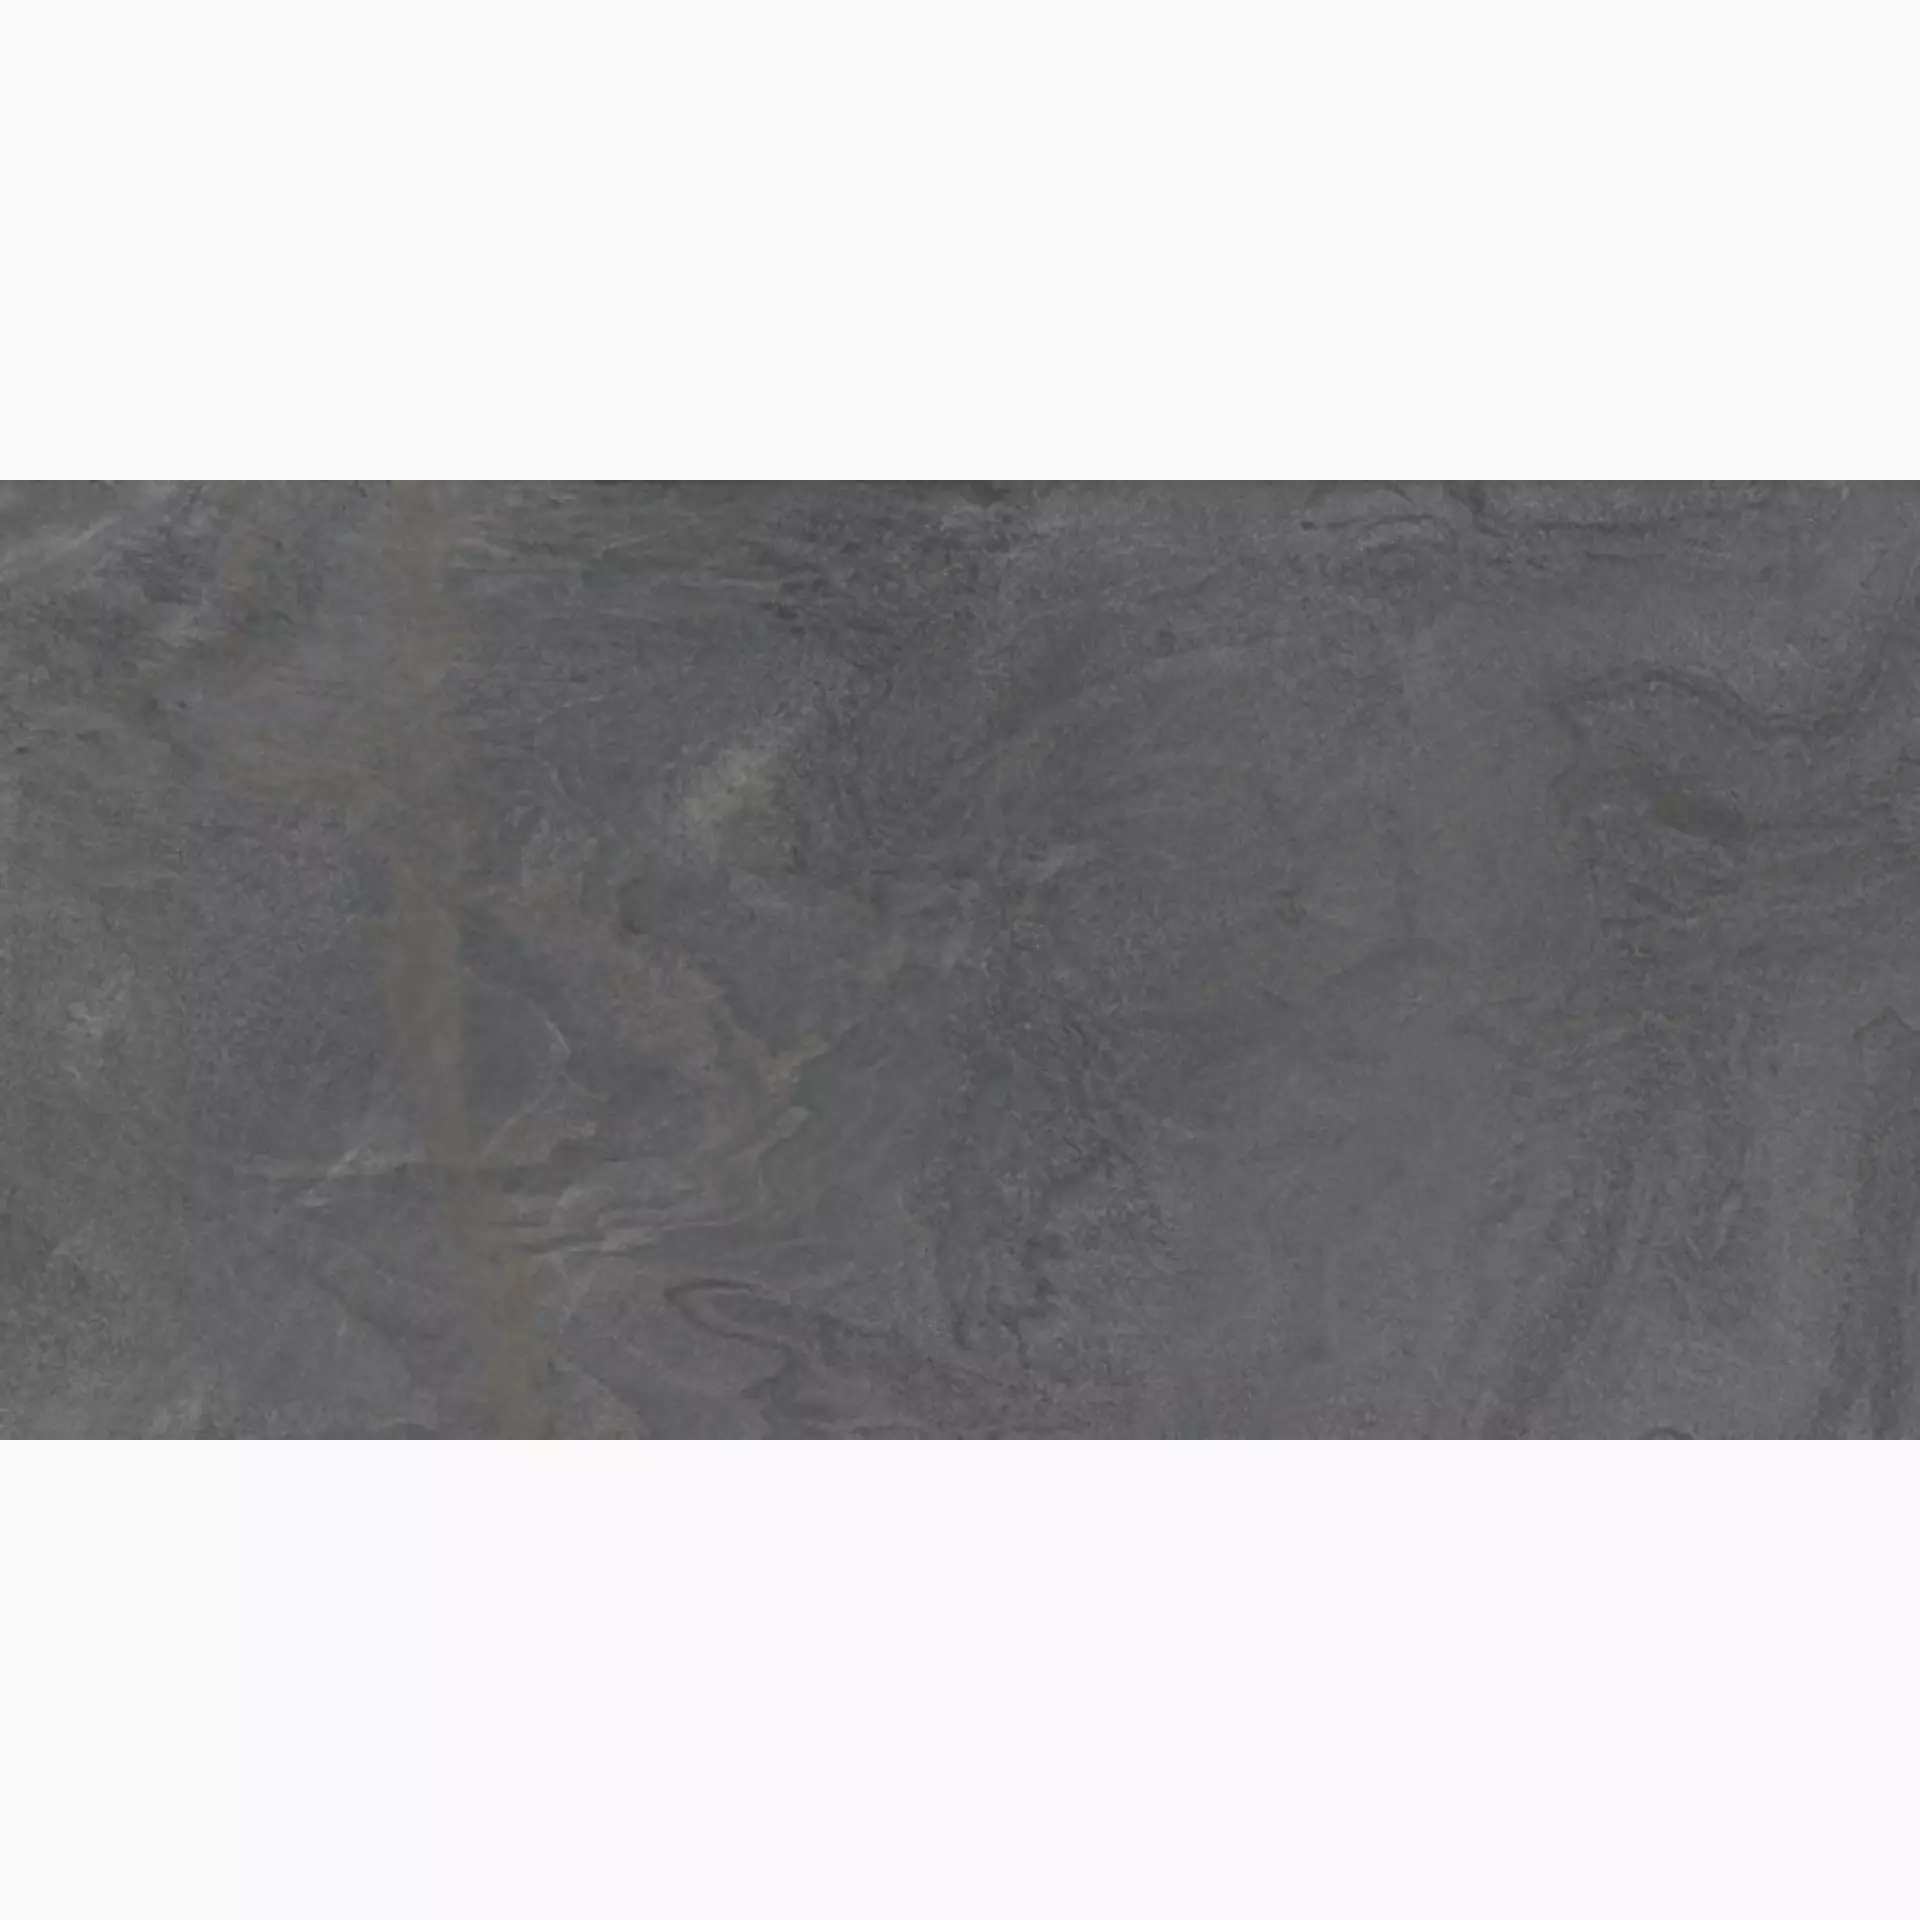 Diesel Liquid Stone Black Naturale – Matt 863748 30x60cm rectified 9mm